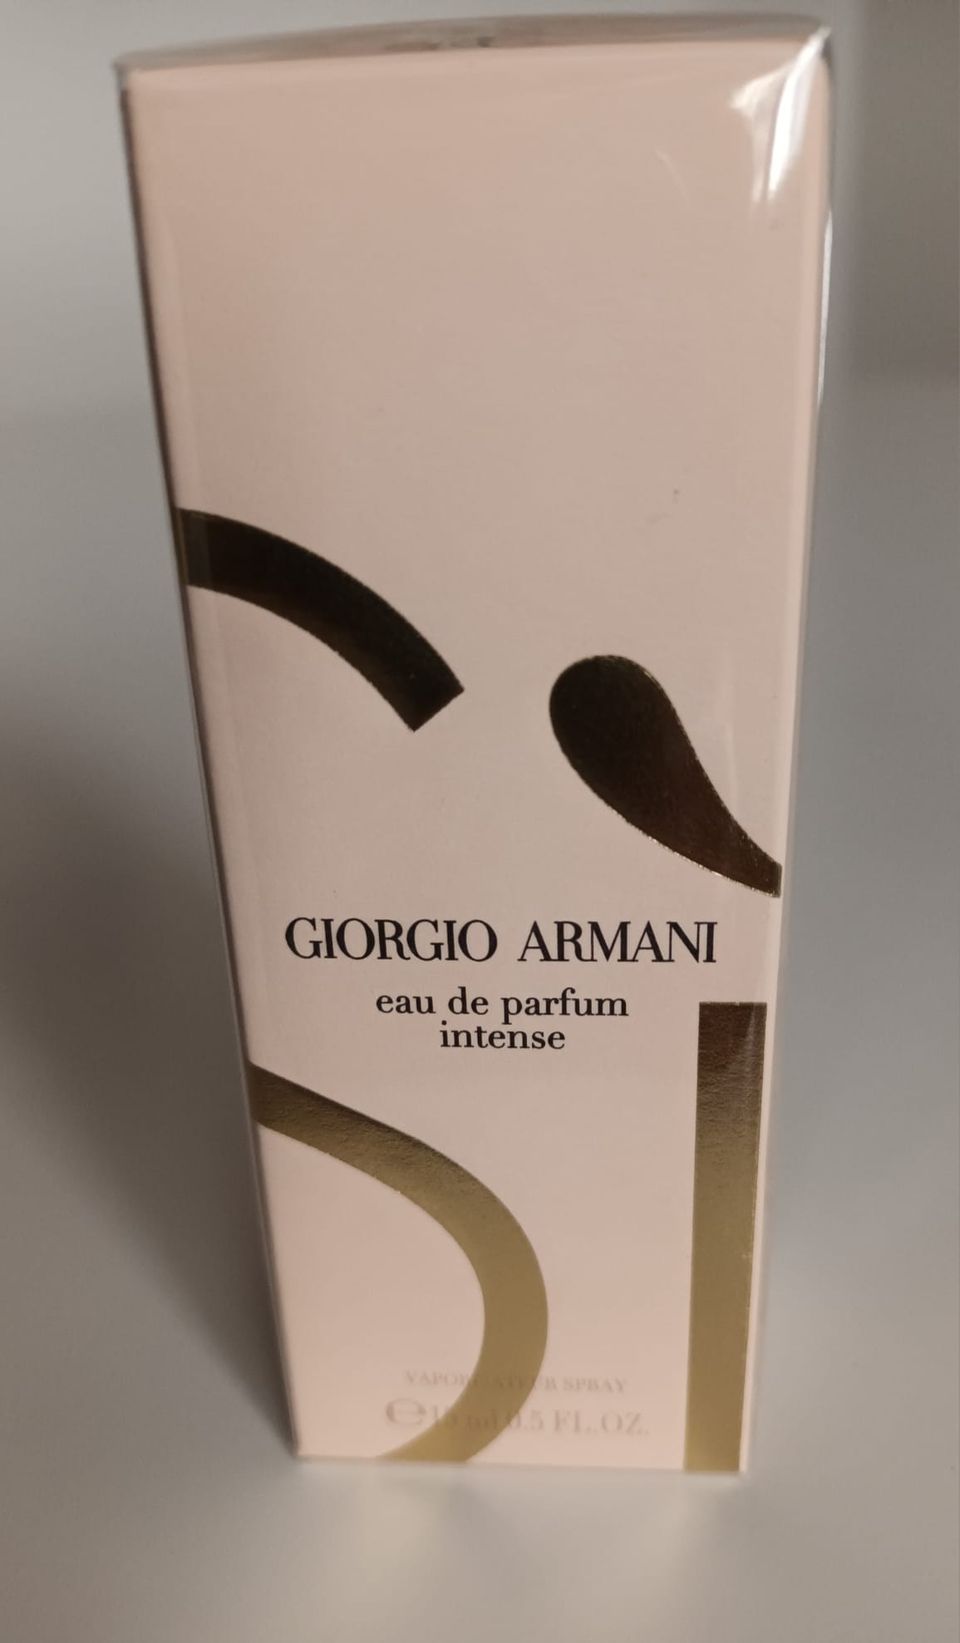 Giorgio Armani Eau de Parfum Intense, 15 ml